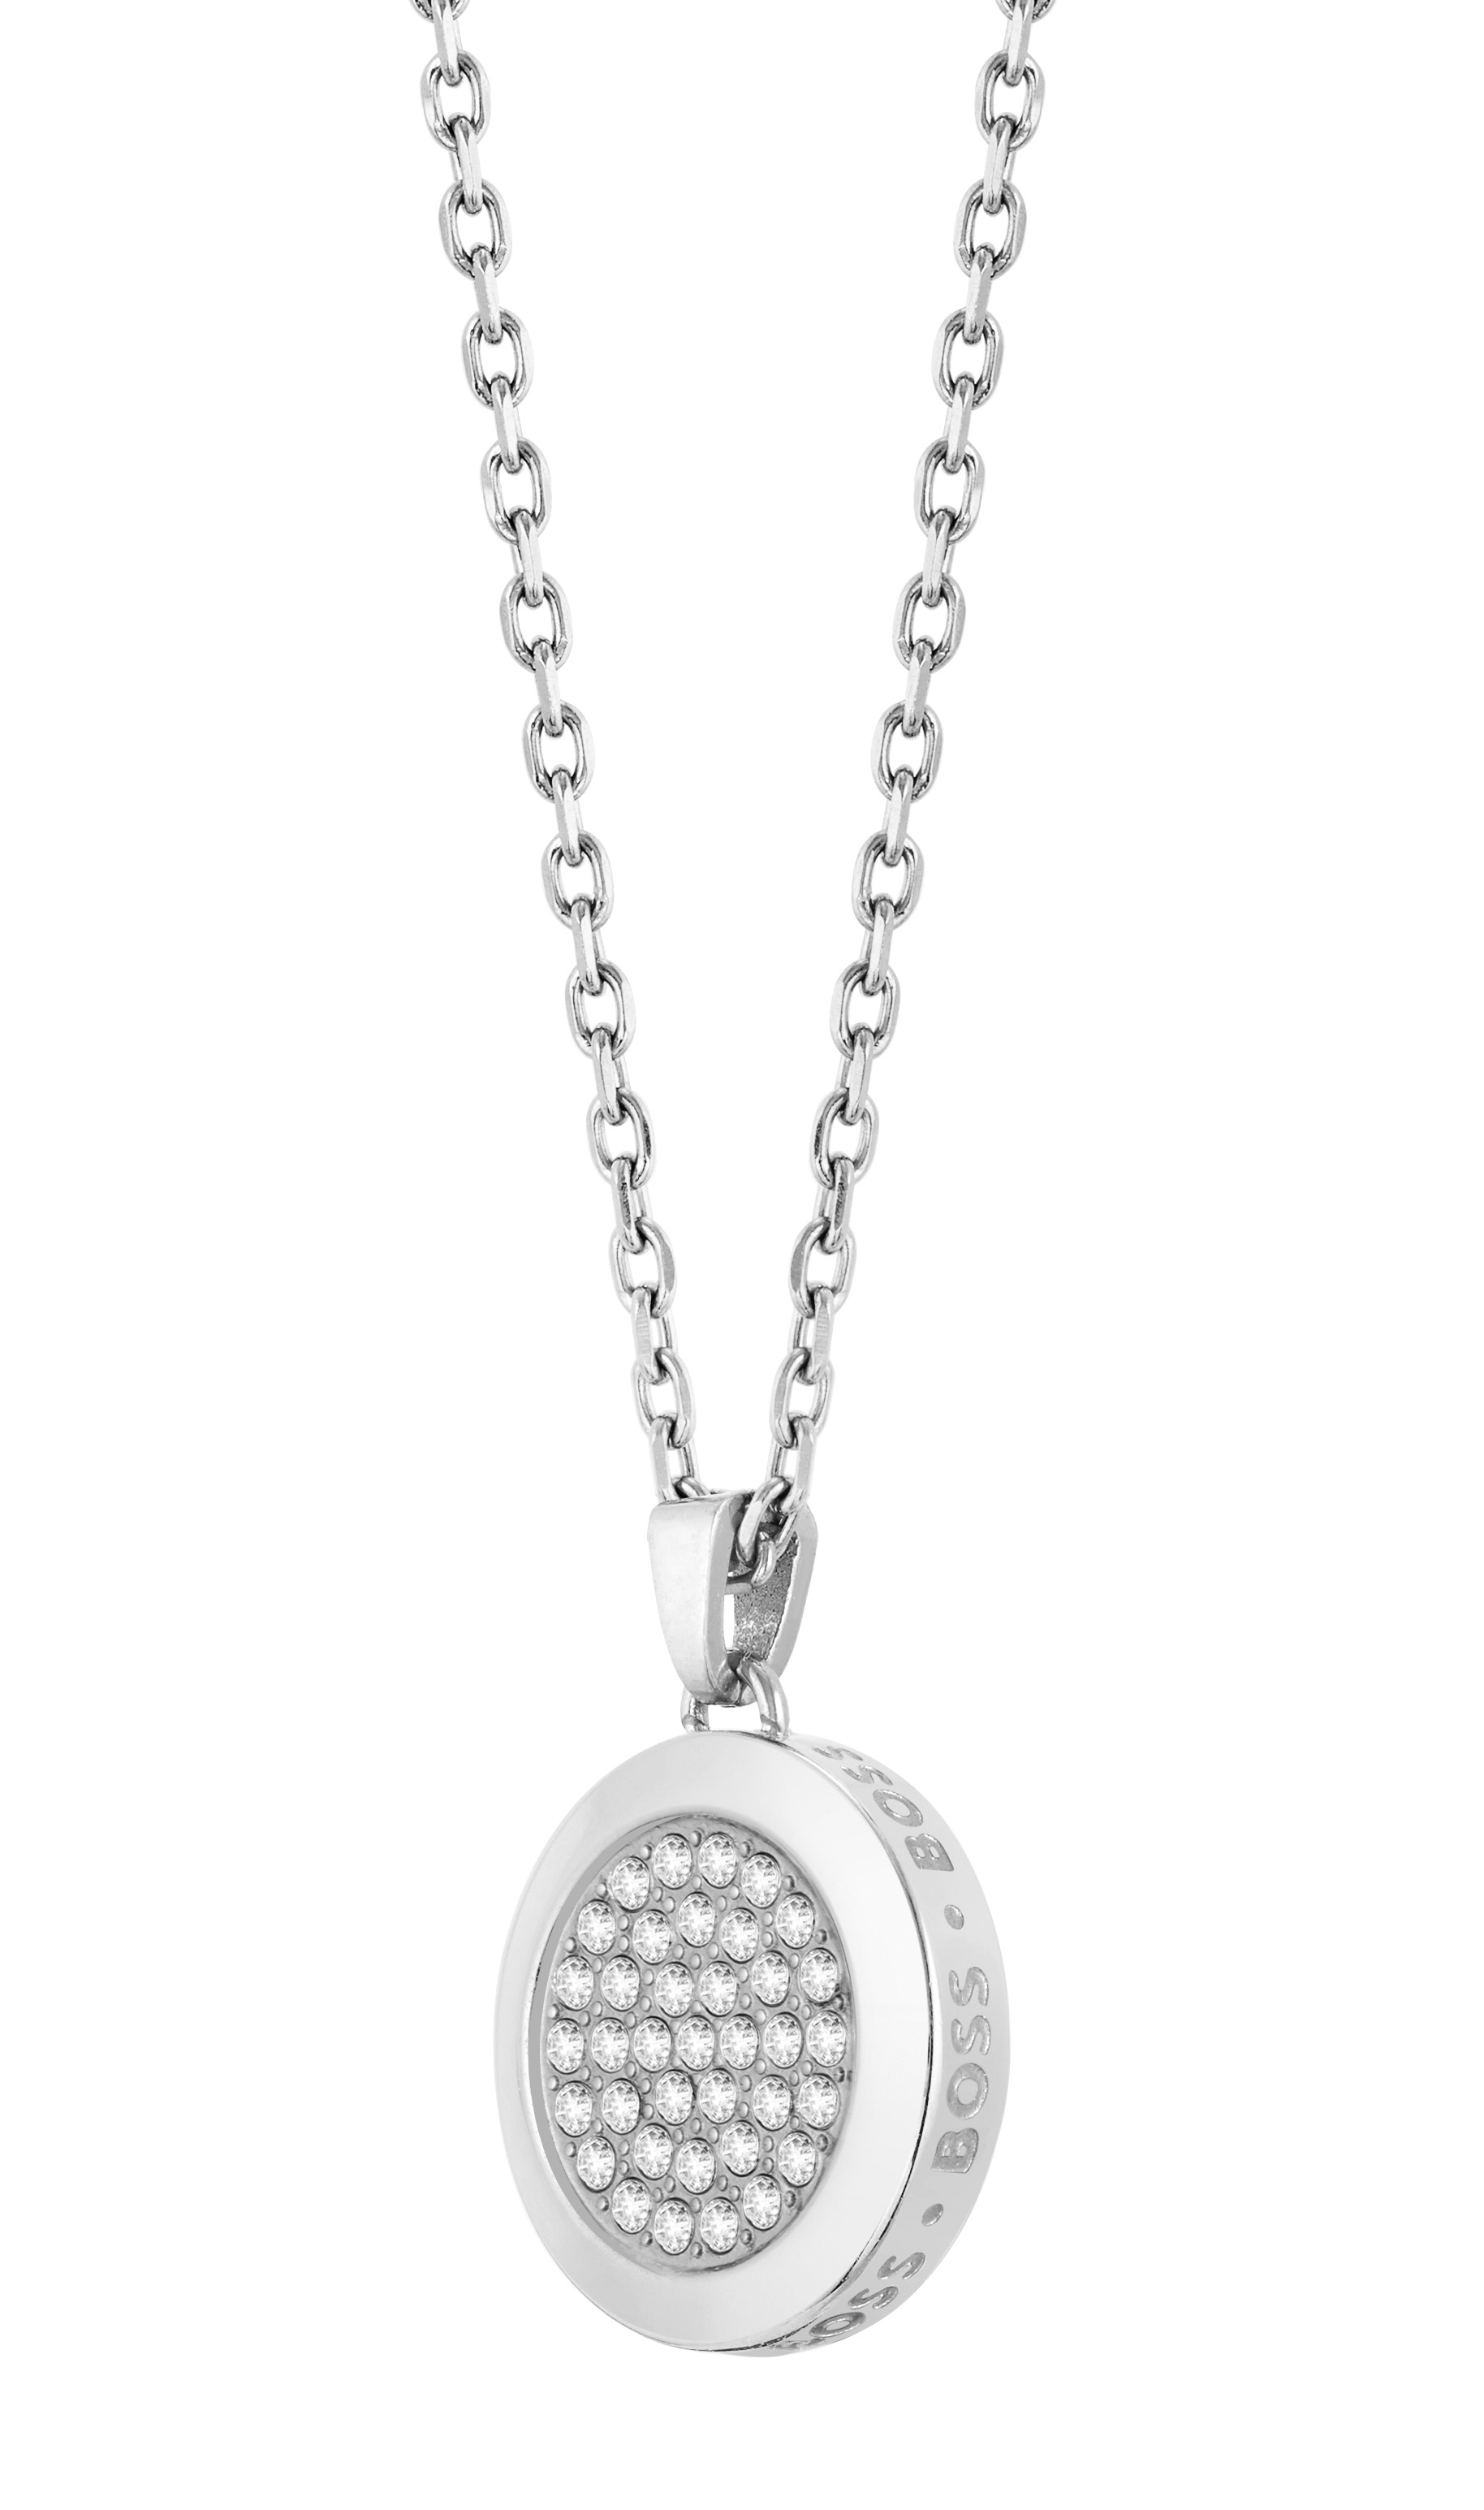 Hugo Boss Oslnivý oceľový náhrdelník s kryštálmi Medallion 1580298